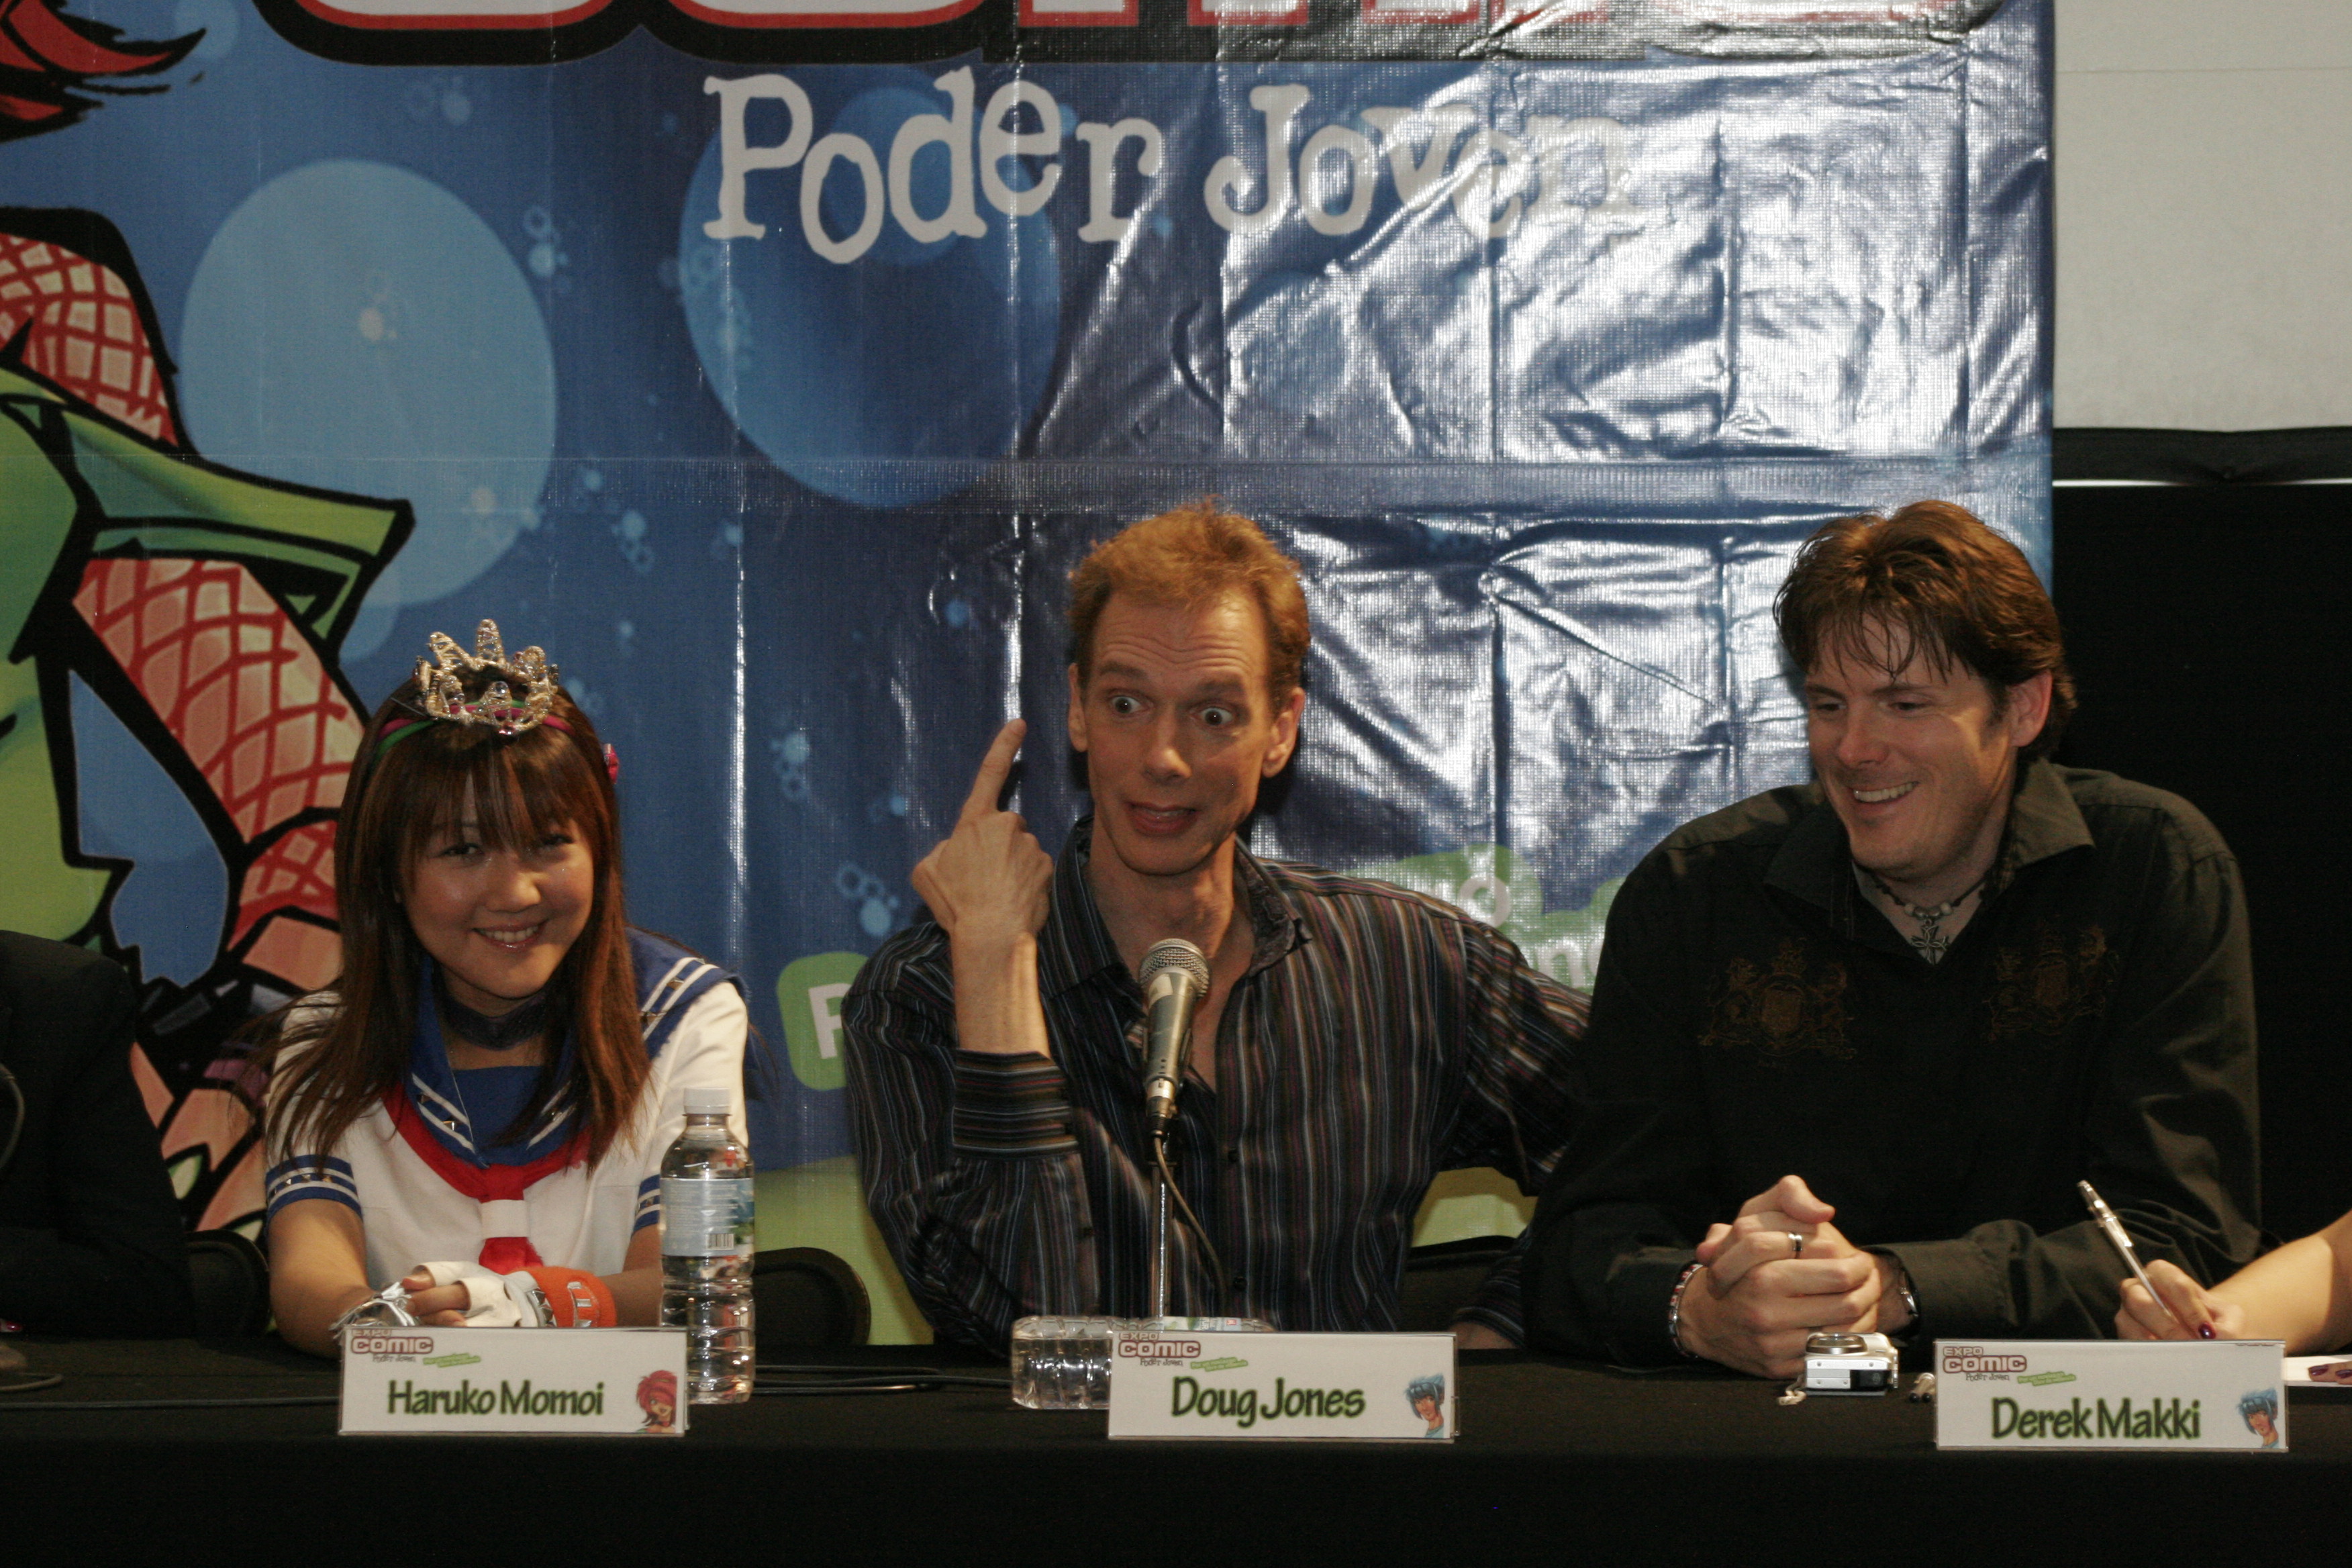 Actors Doug Jones and Derek Maki during a press junket in Mexico. Derek was promoting his comic book I, OF THE WOLF.